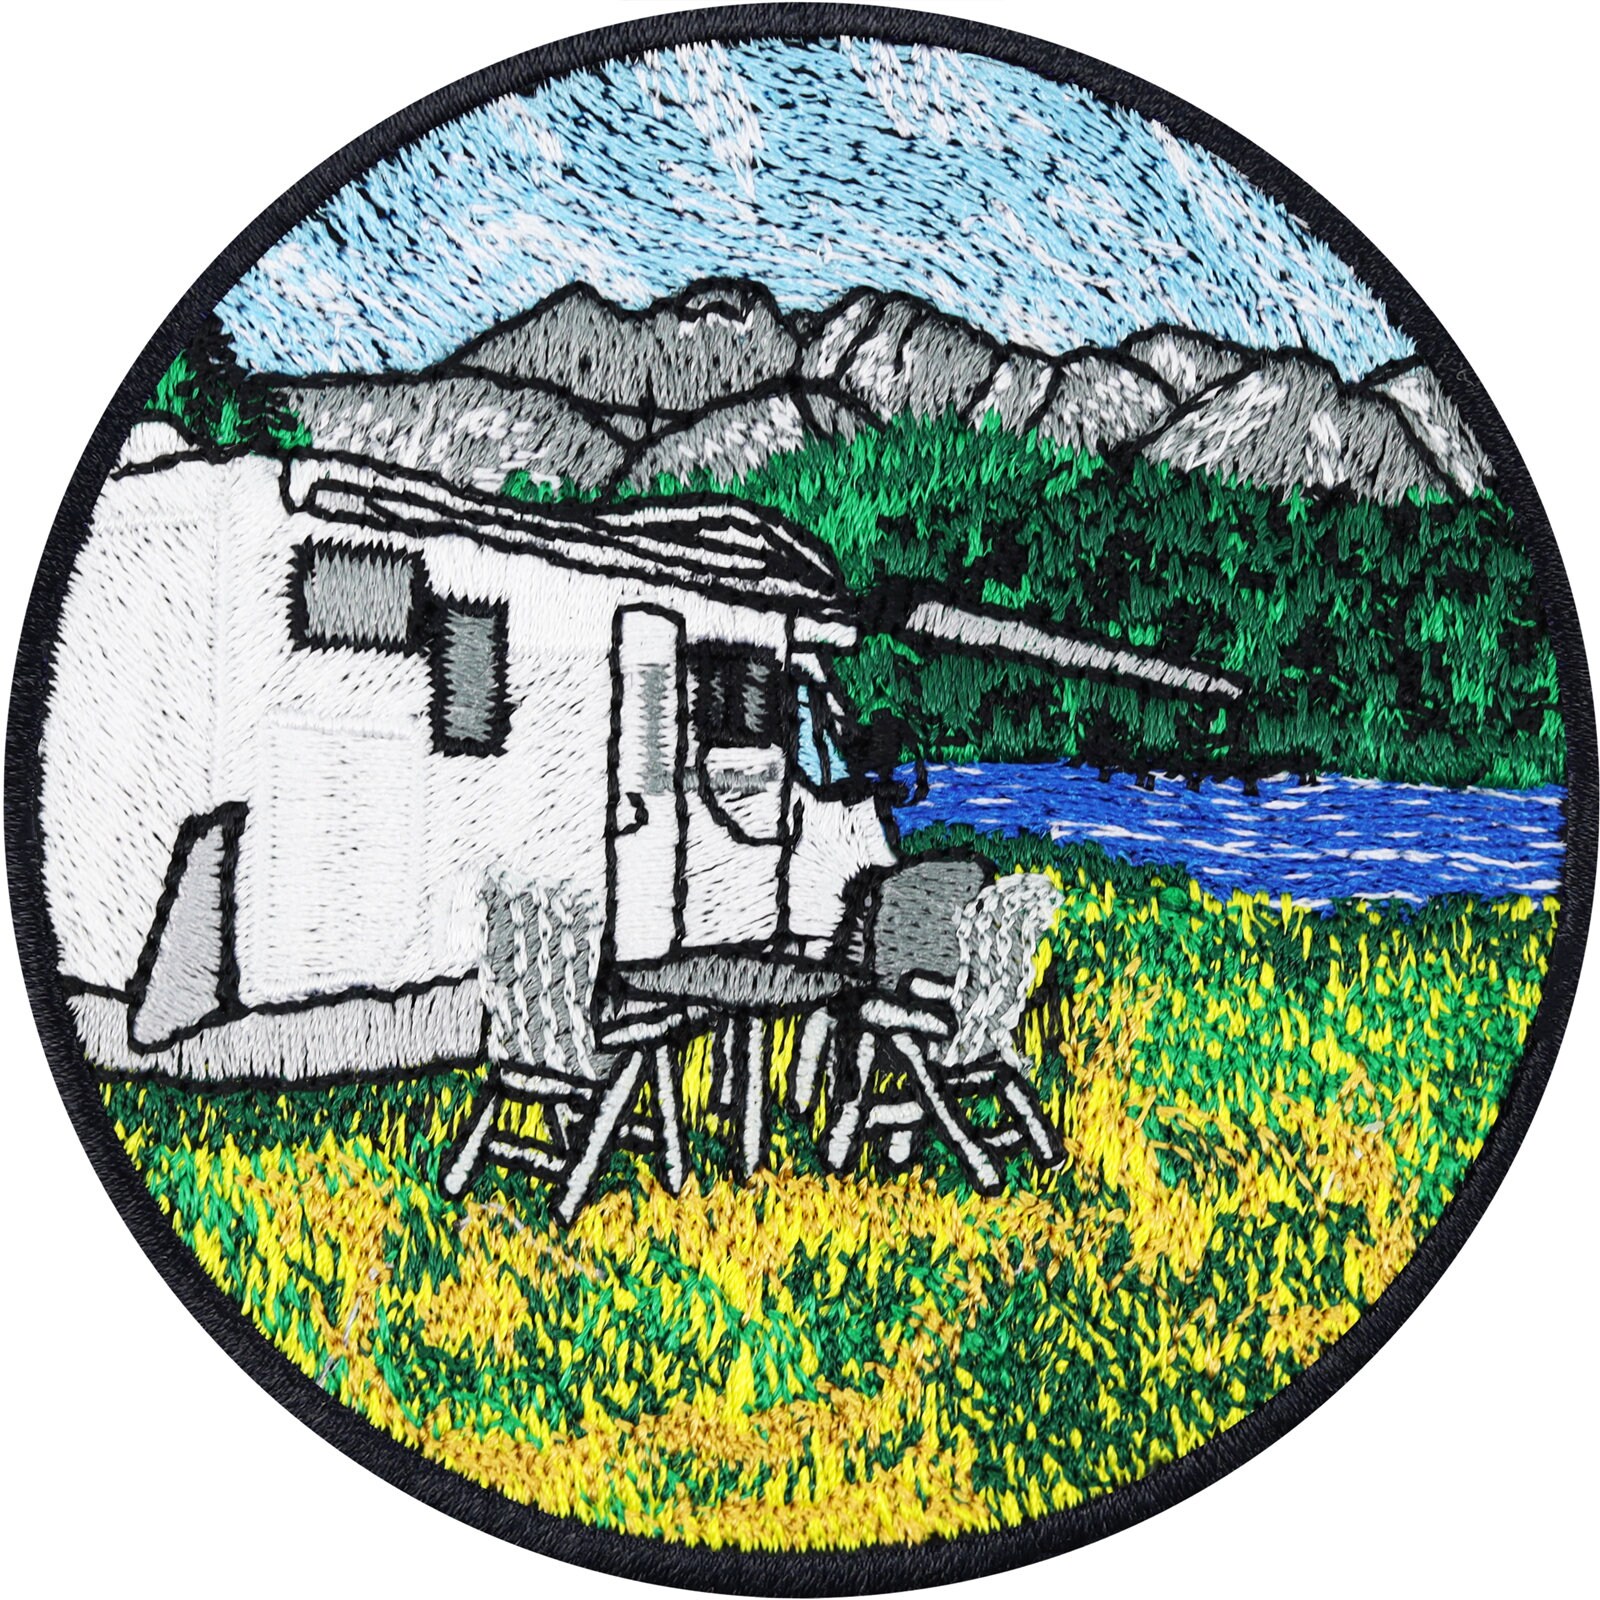 klebenswichtig Adventure XL 100 cm Camping Camper Urlaub Outdoor Auto  Caravan Camping Camper Wohnmobil Aufkleber Tuning Aufkleber Vinyl :  : Auto & Motorrad